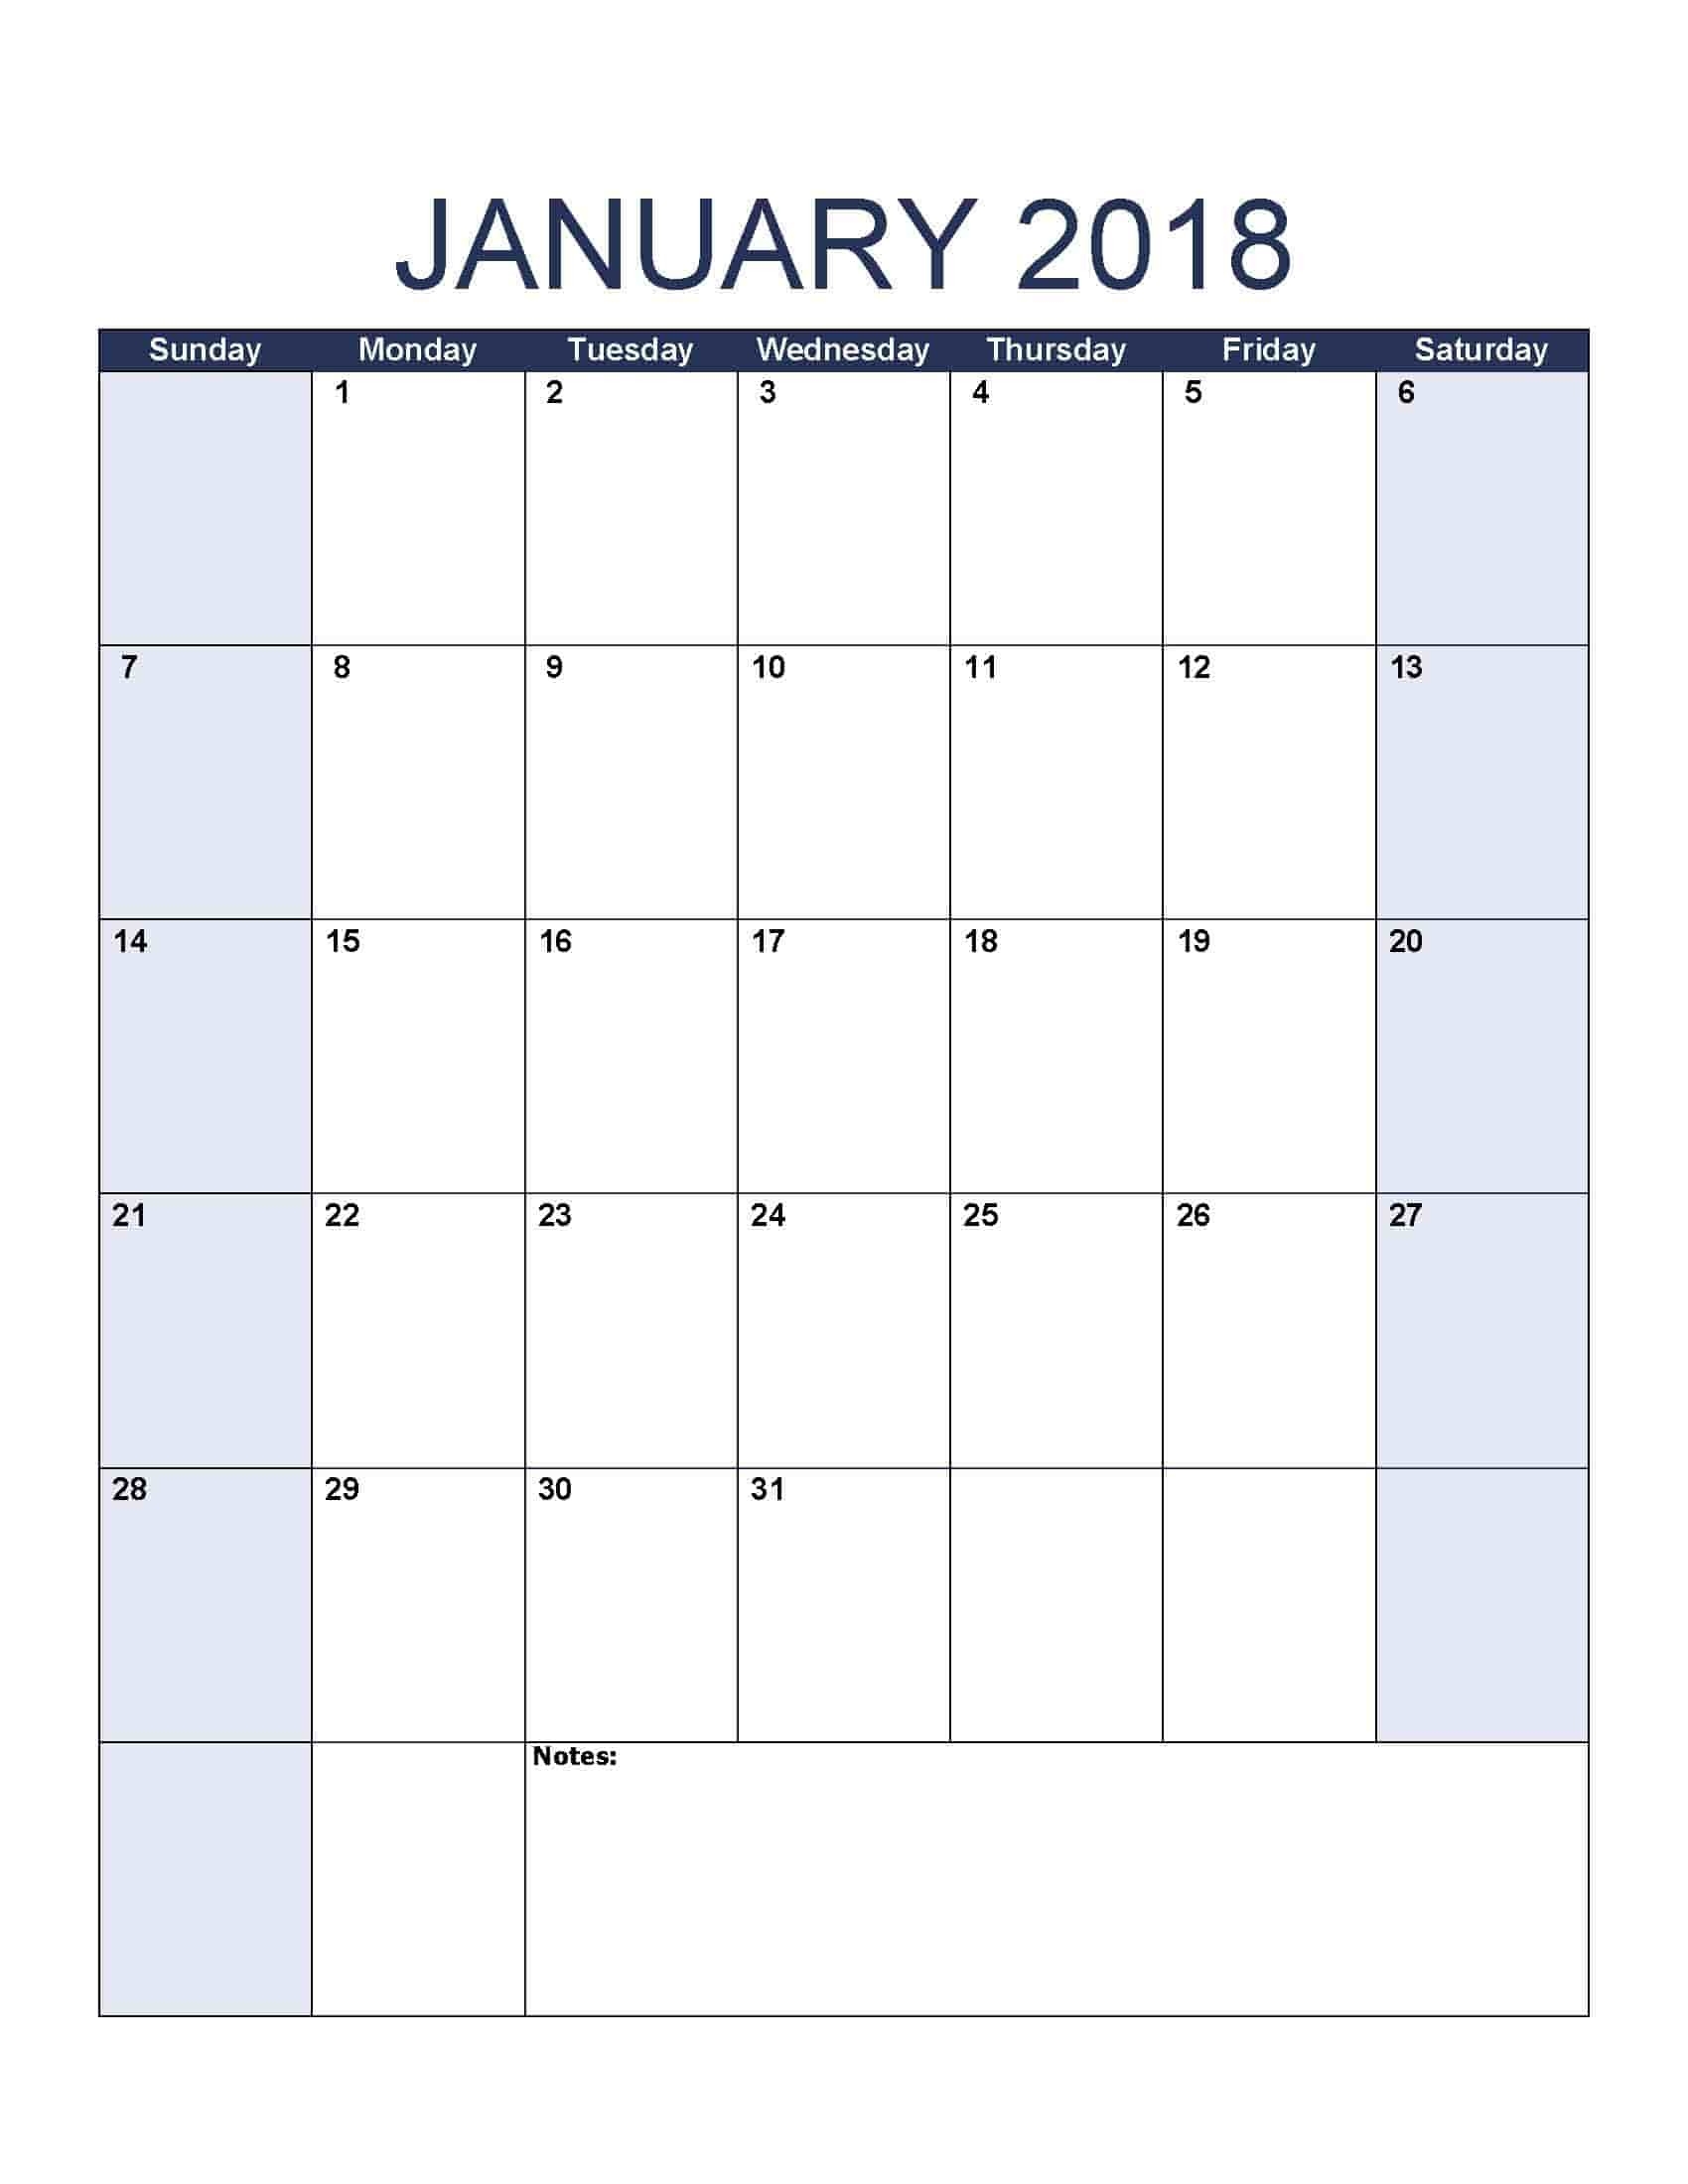 January 2018 Calendar - Free, Printable Calendar Templates-Free Printable Calendars With Cagtholic And Muslim Holidays